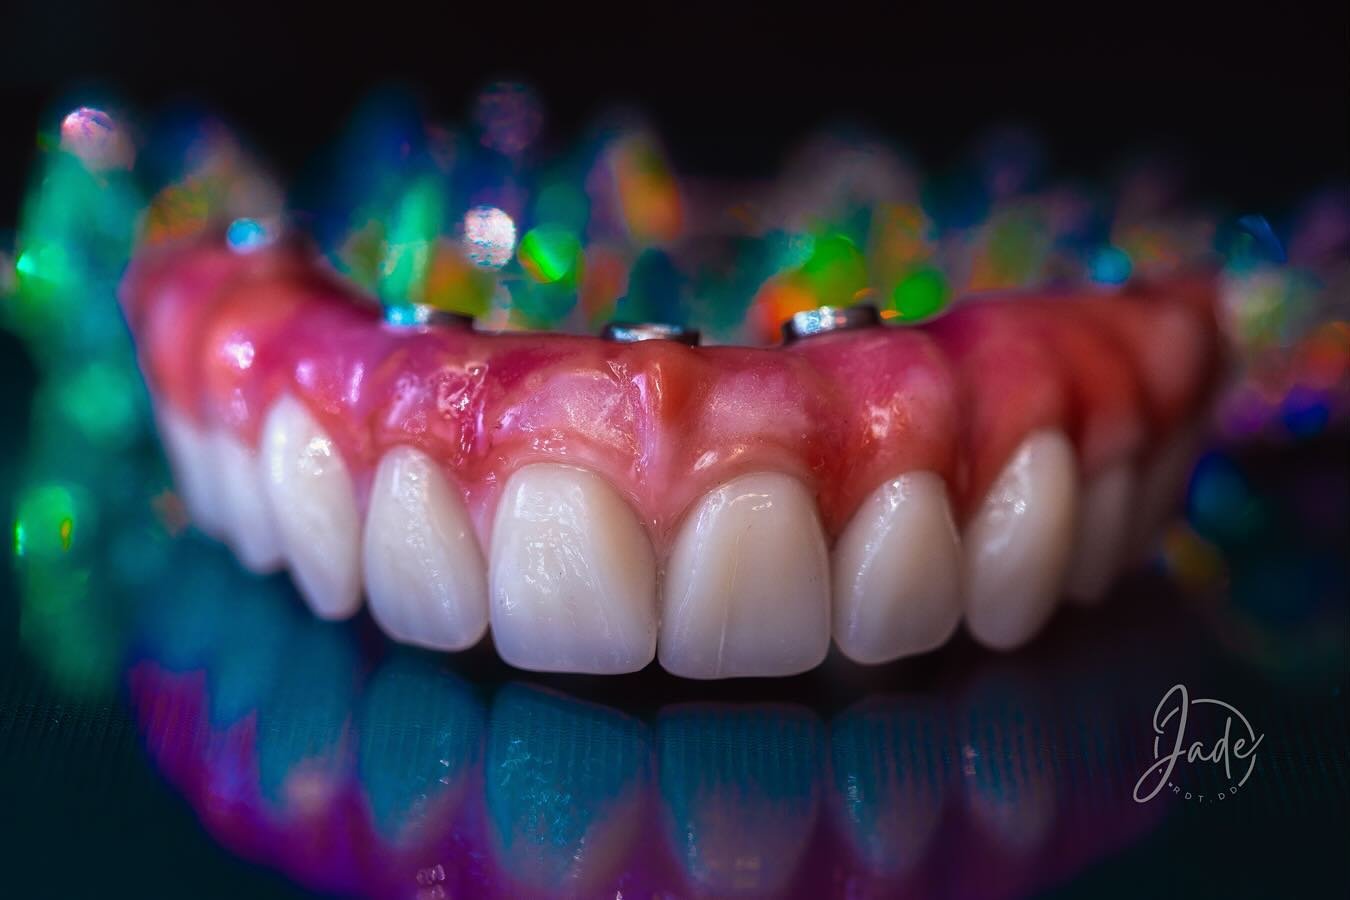 The sparks of light and colour ✨🌈.
.
.
.
Teeth + Wax: @candulor 
Photo + Maker: @jade.rdtdd 
Bar: @nobelbiocareus
.
.
.
#denture #denturetechnician #dentalphotographers #candulor #nobelbiocare #denturist #denturistlife #clinicaldentaltechnician #imp